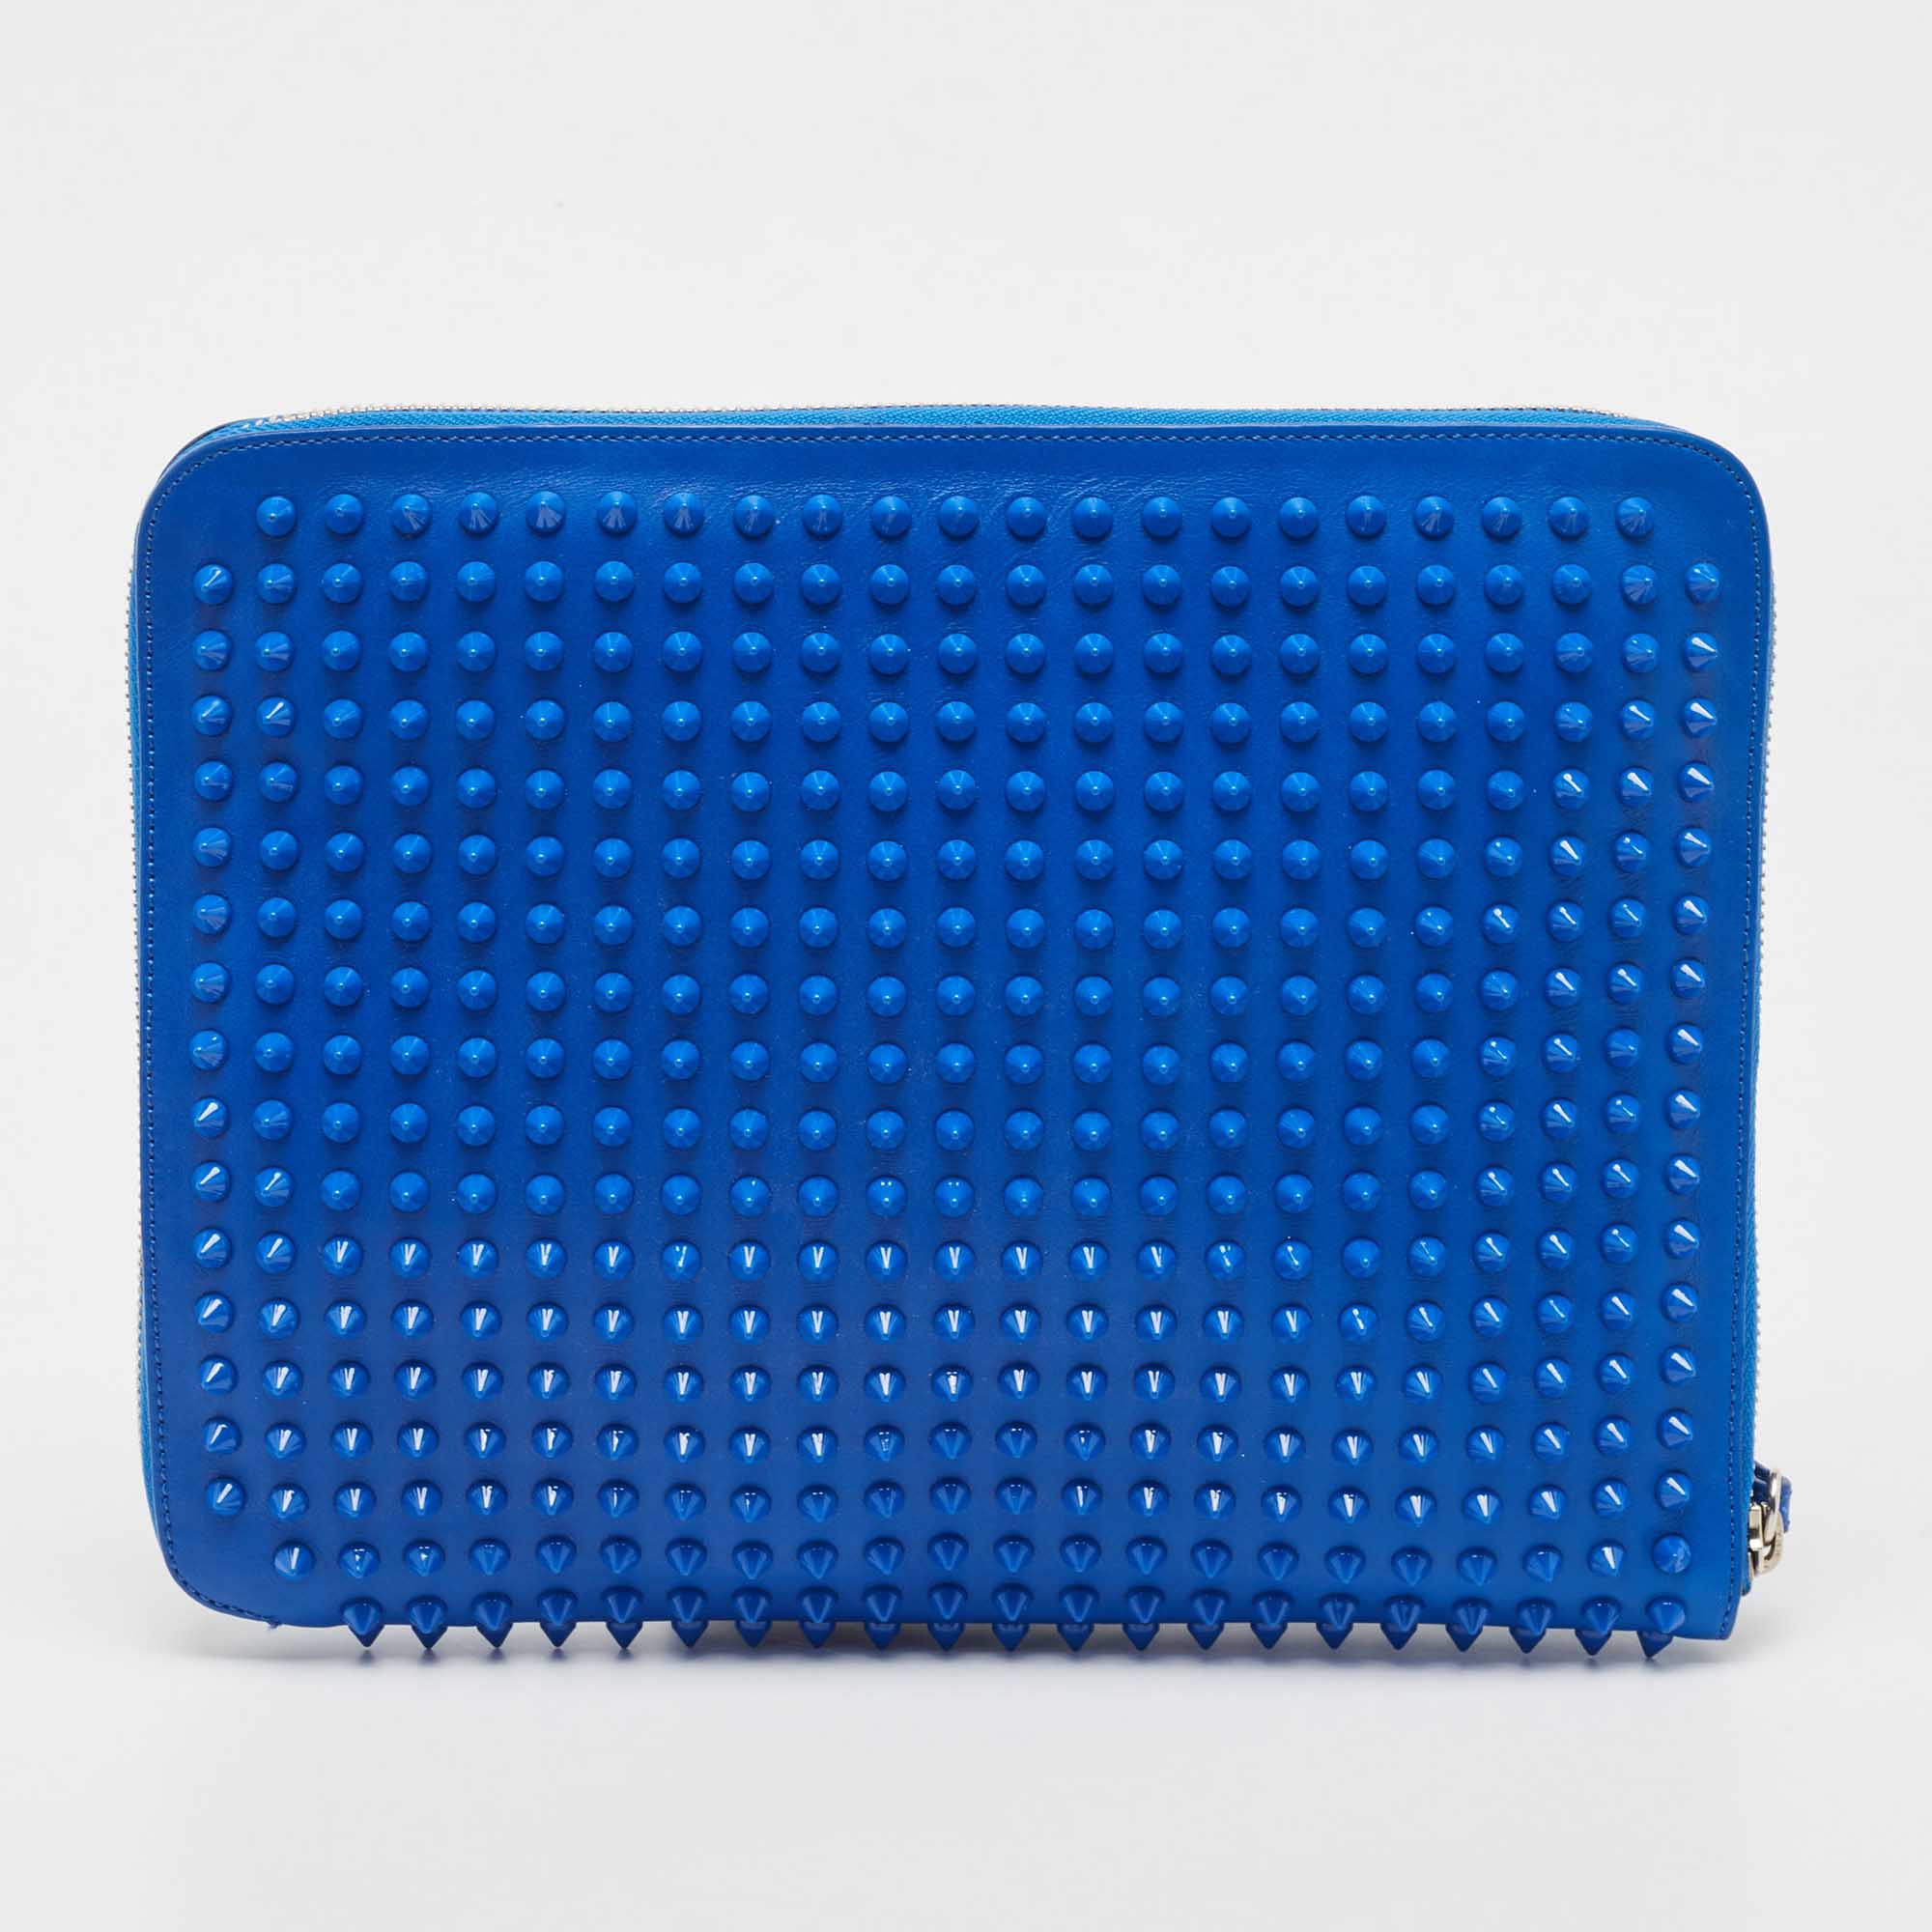 Christian Louboutin Blue Leather Studded IPad Case